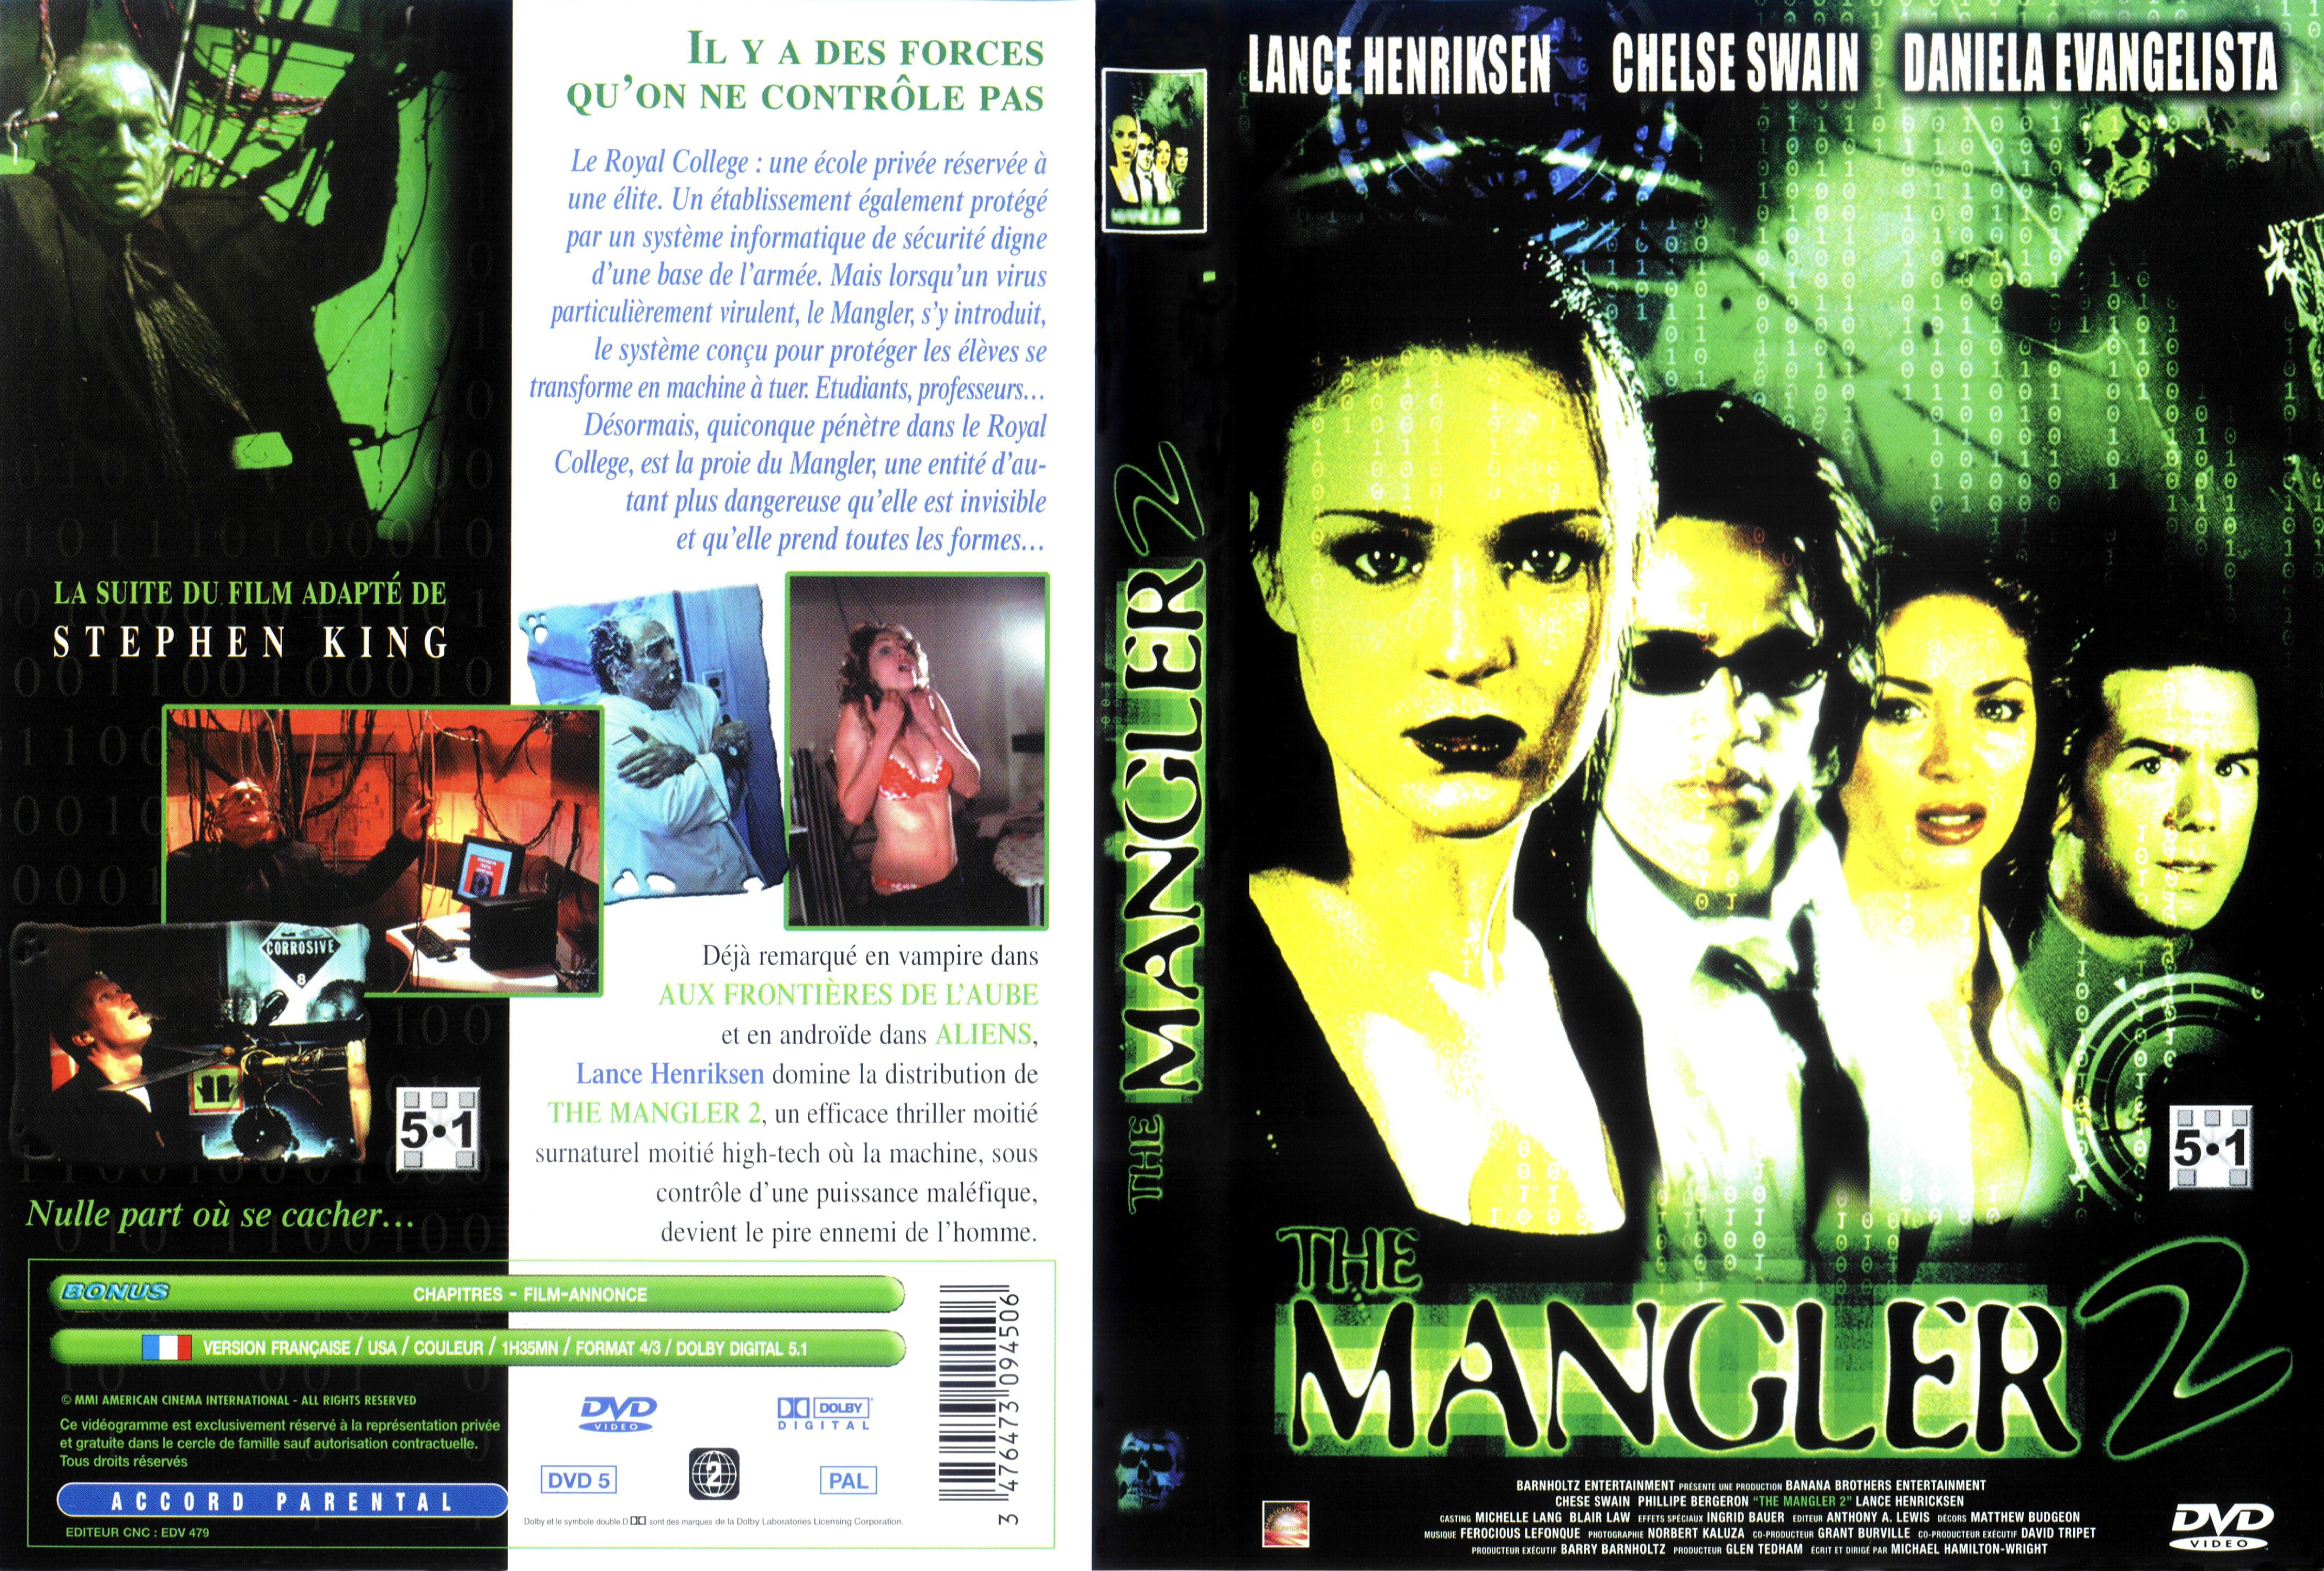 Jaquette DVD The Mangler 2 v2